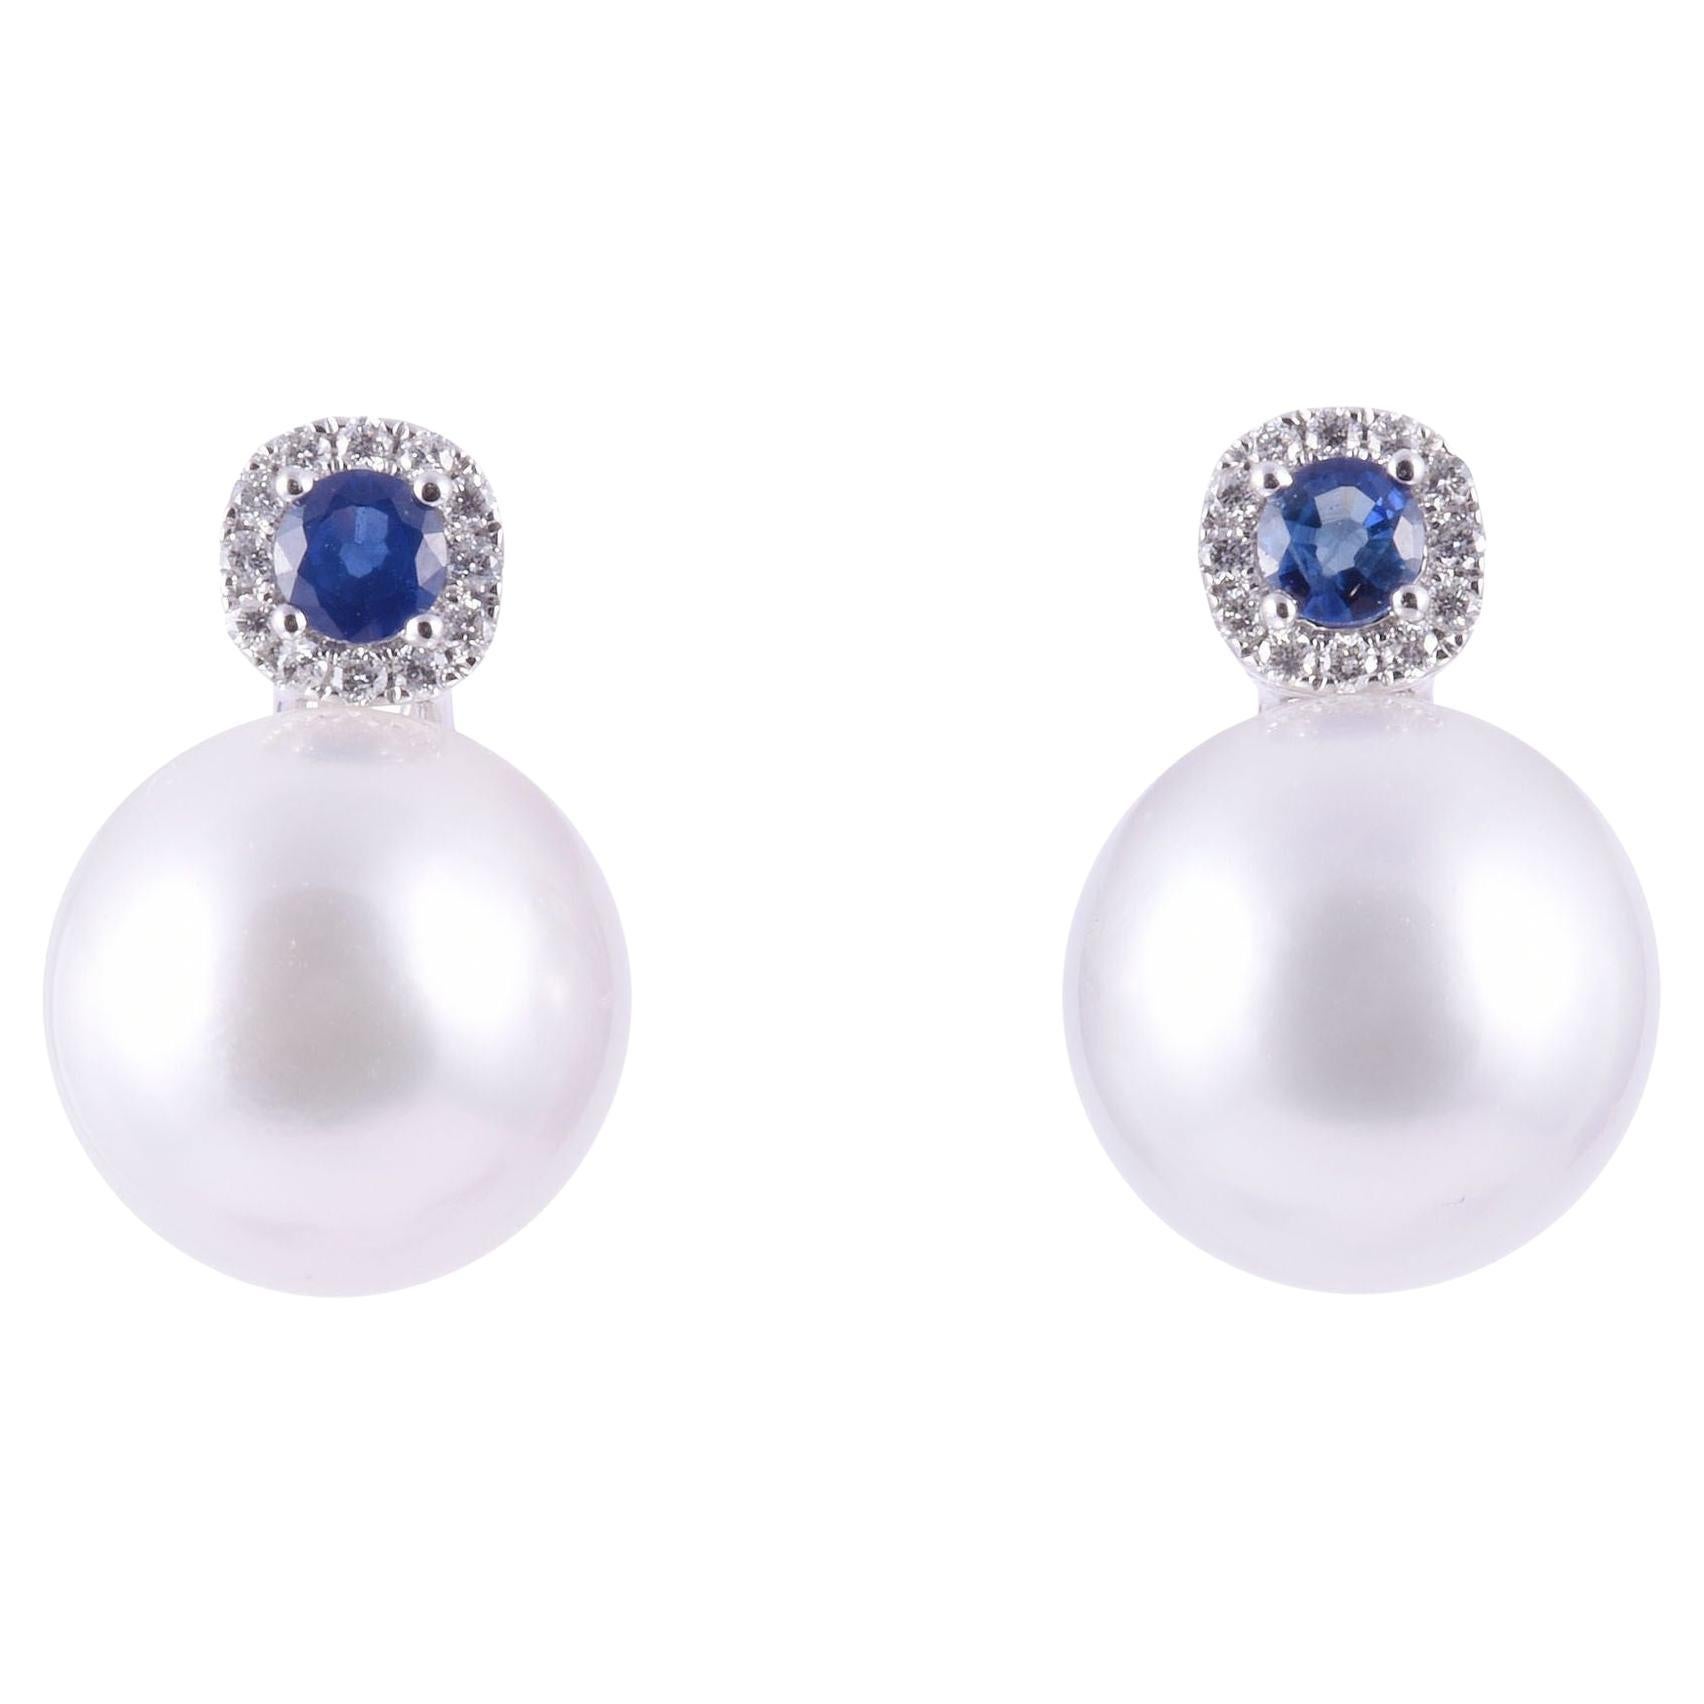 South Seas Pearl & Sapphire Earrings For Sale